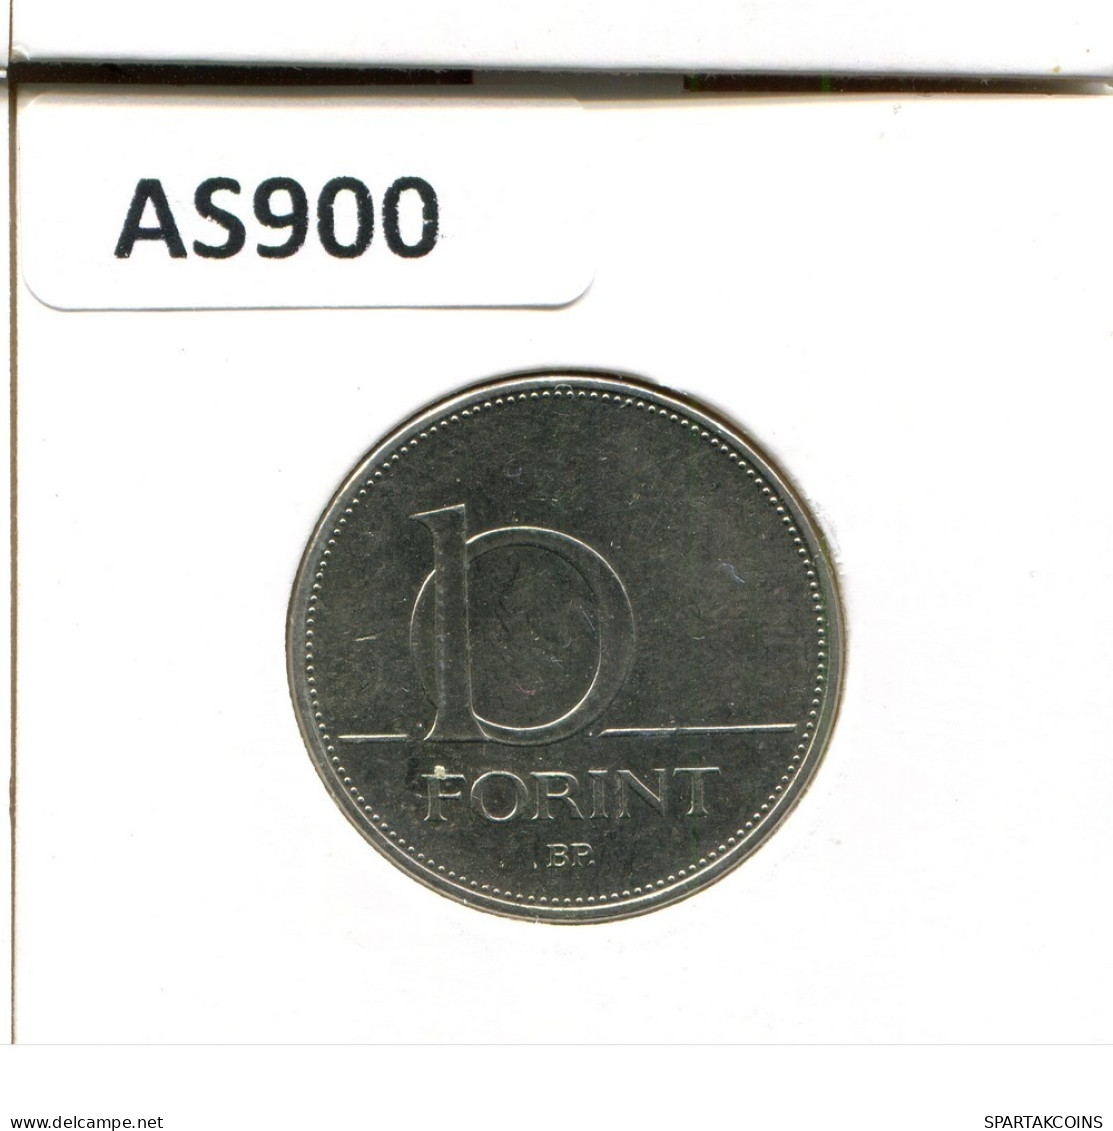 10 FORINT 2004 HUNGARY Coin #AS900.U.A - Hungary